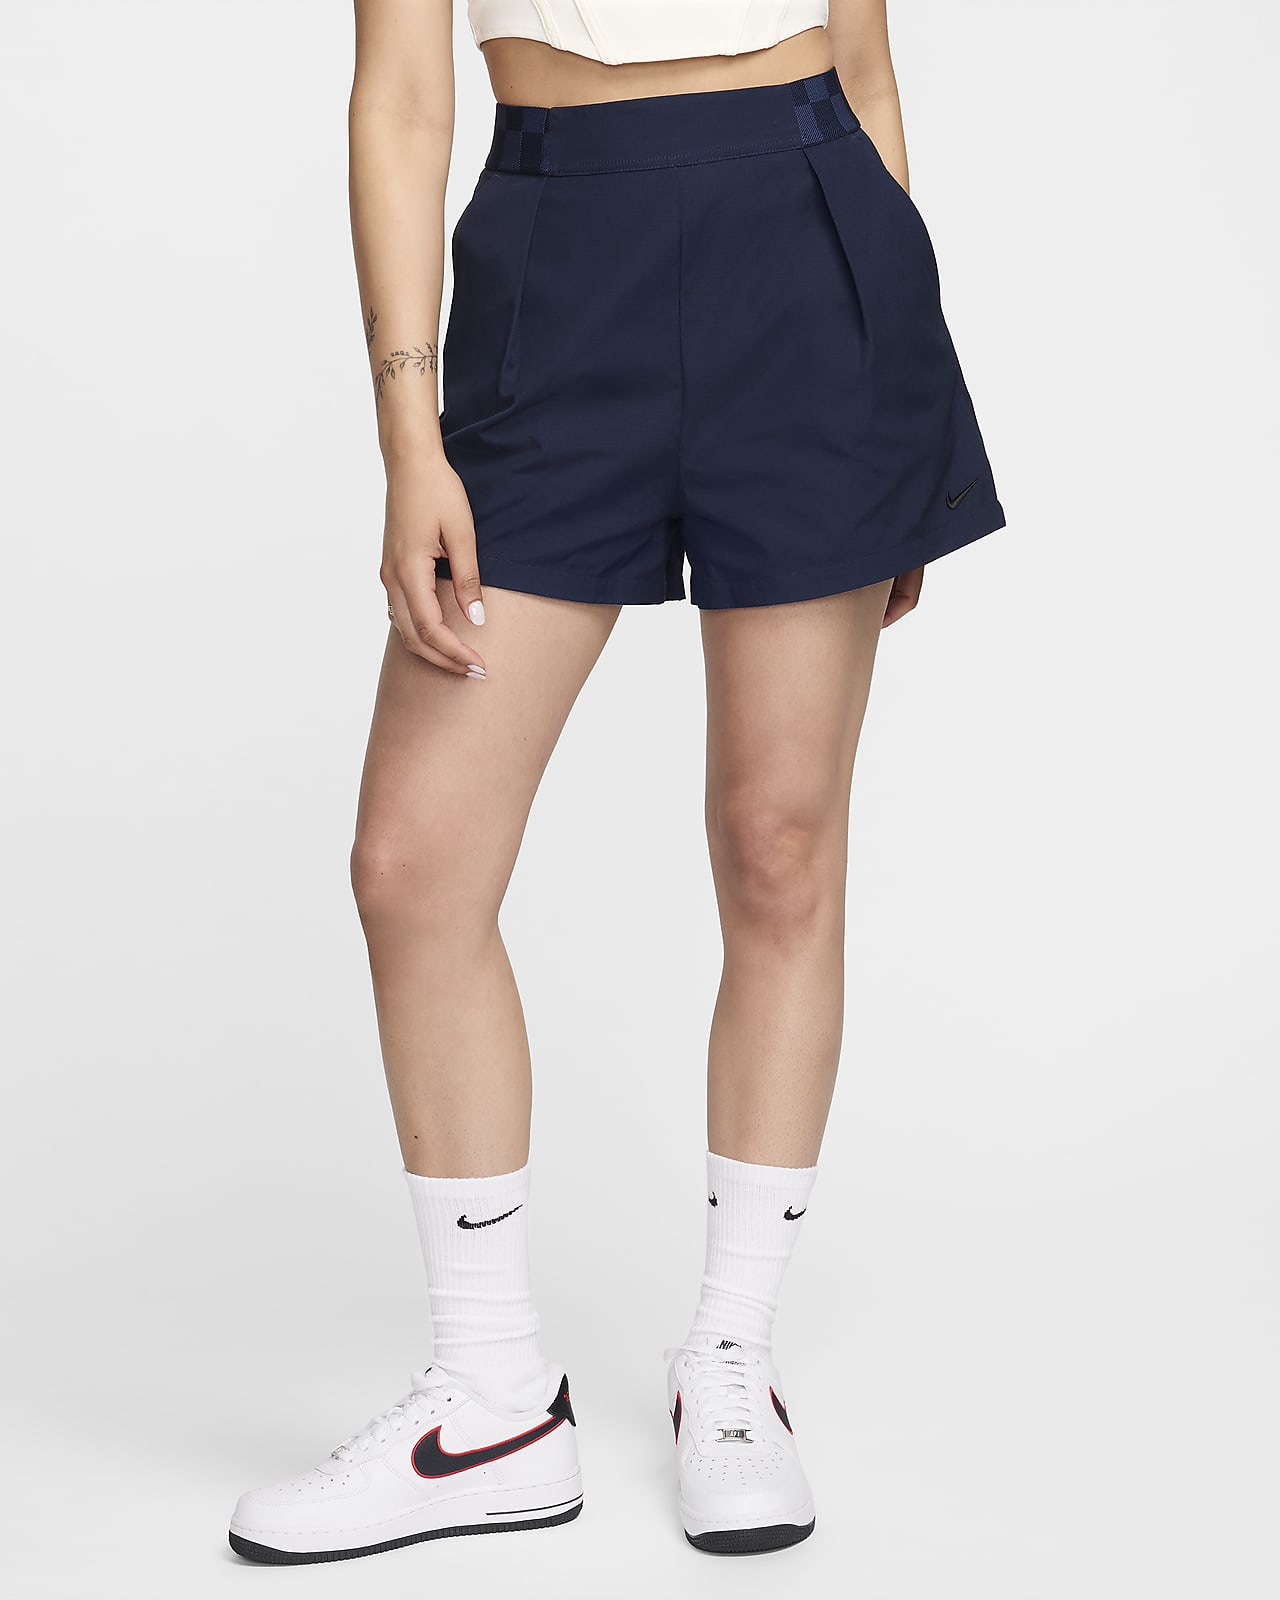 Nike Sportswear Collection magas derekú, 8 cm-es női rövidnadrág